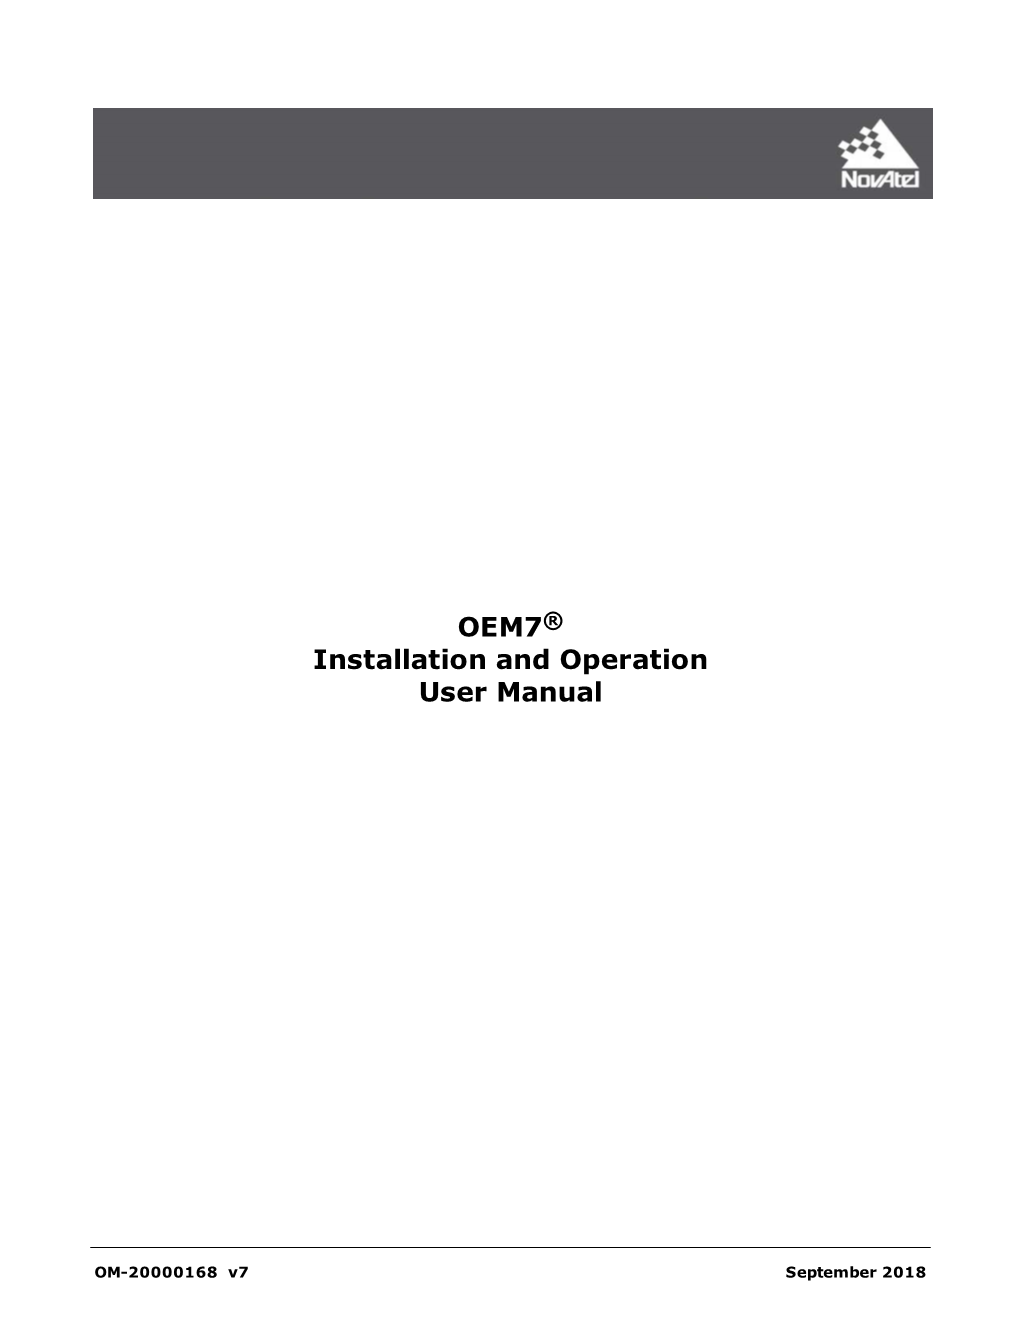 Novatel OEM7 Installation and Operations User Manual